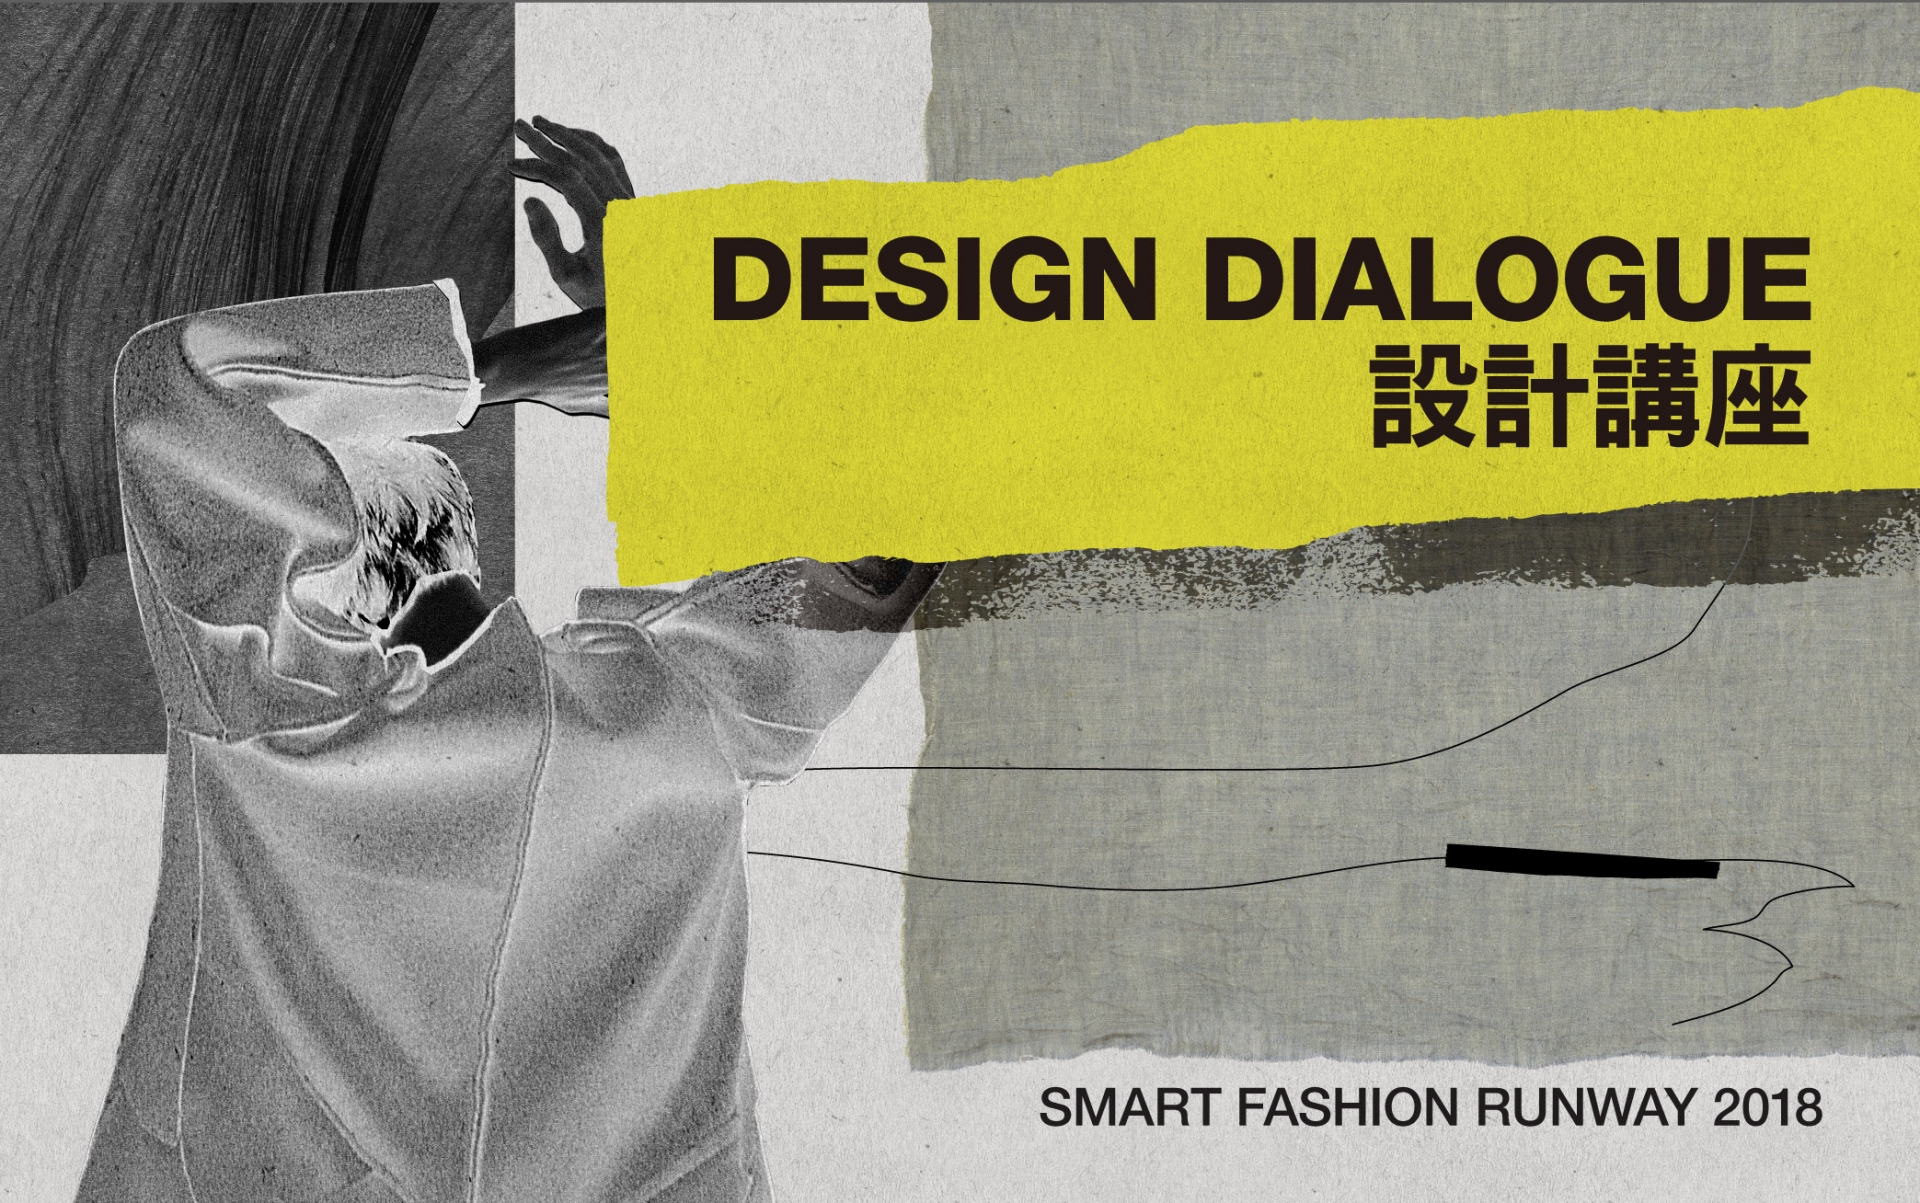 Smart Fashion Runway 2018 - Design Dialogues 